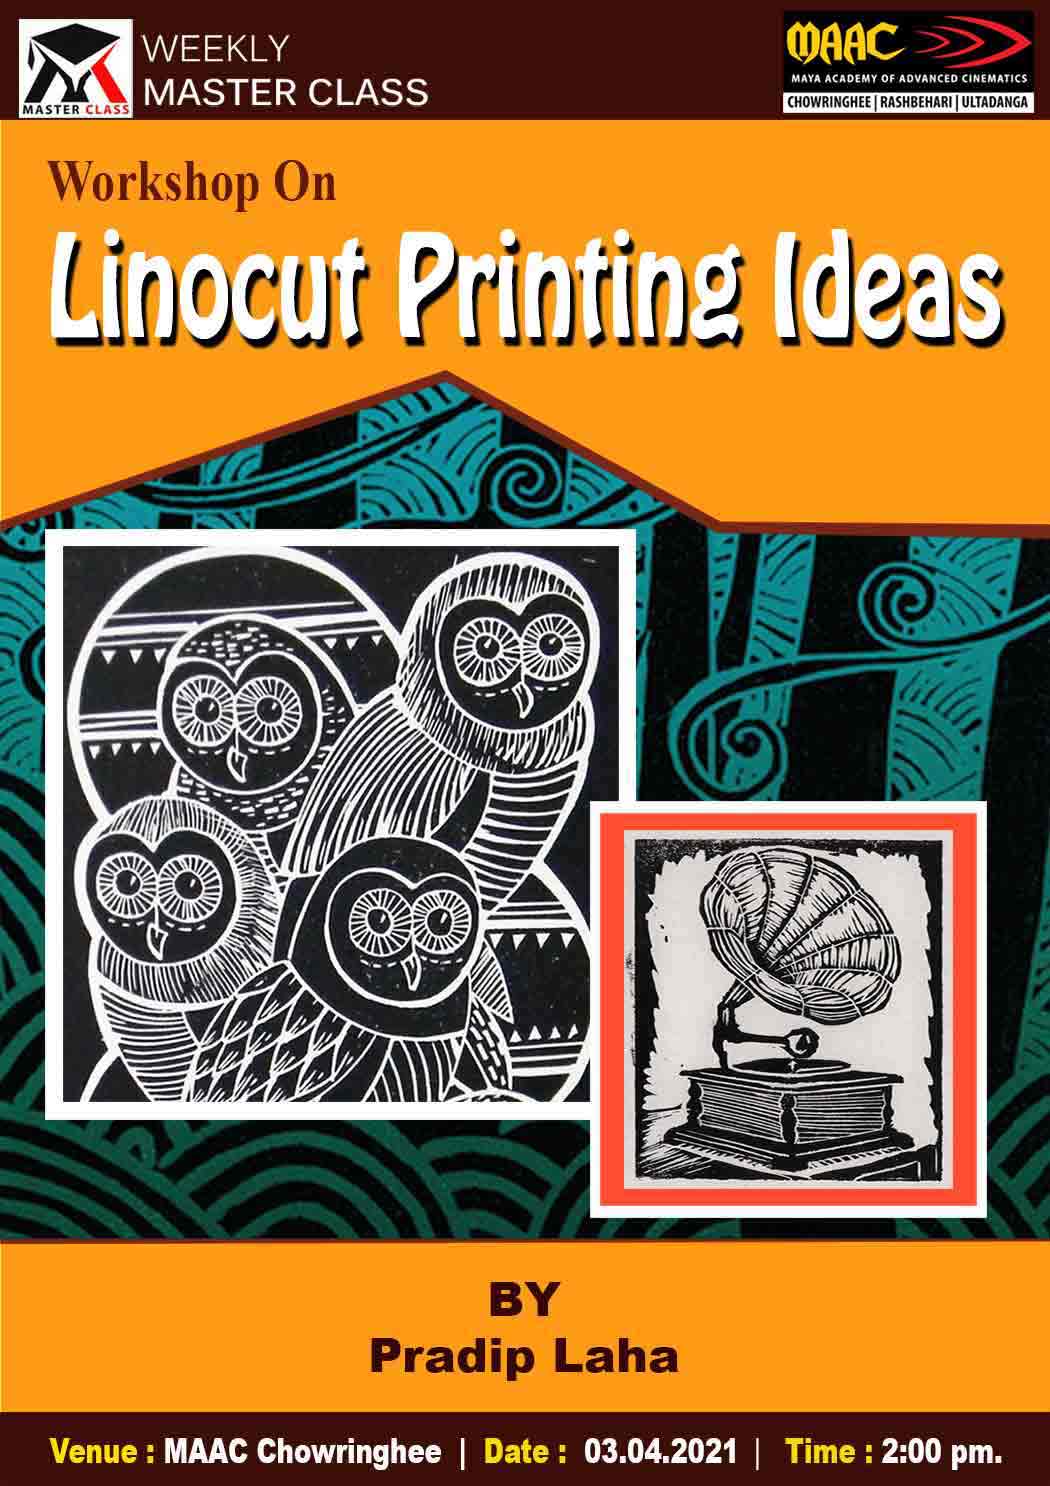 Weekly Master Class on Linocut Printing Ideas